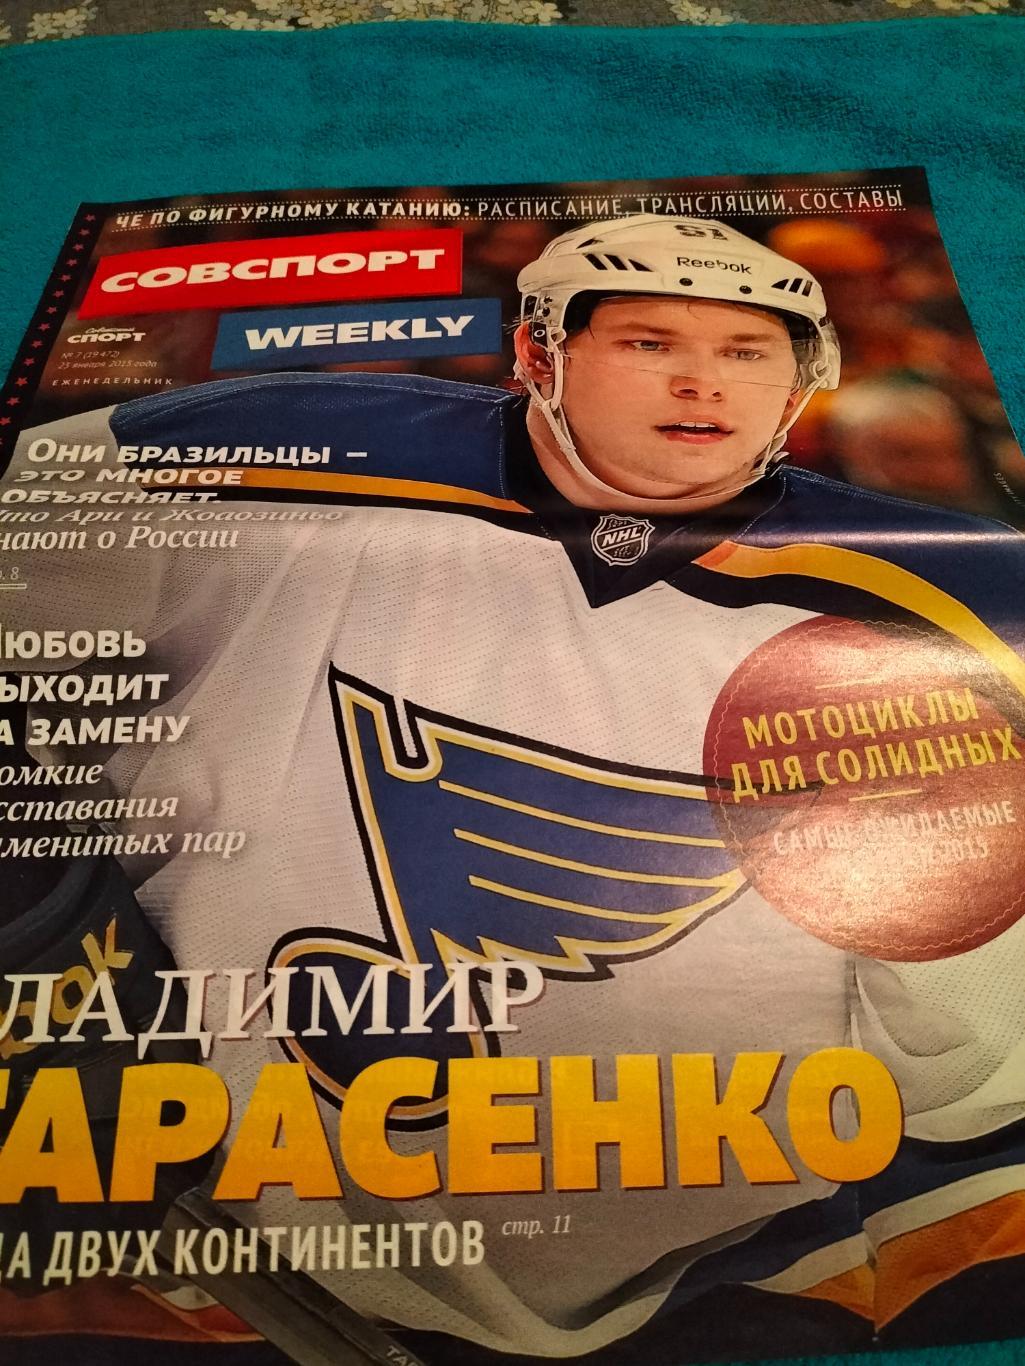 Советский Спорт Weekly №7 2015 год.